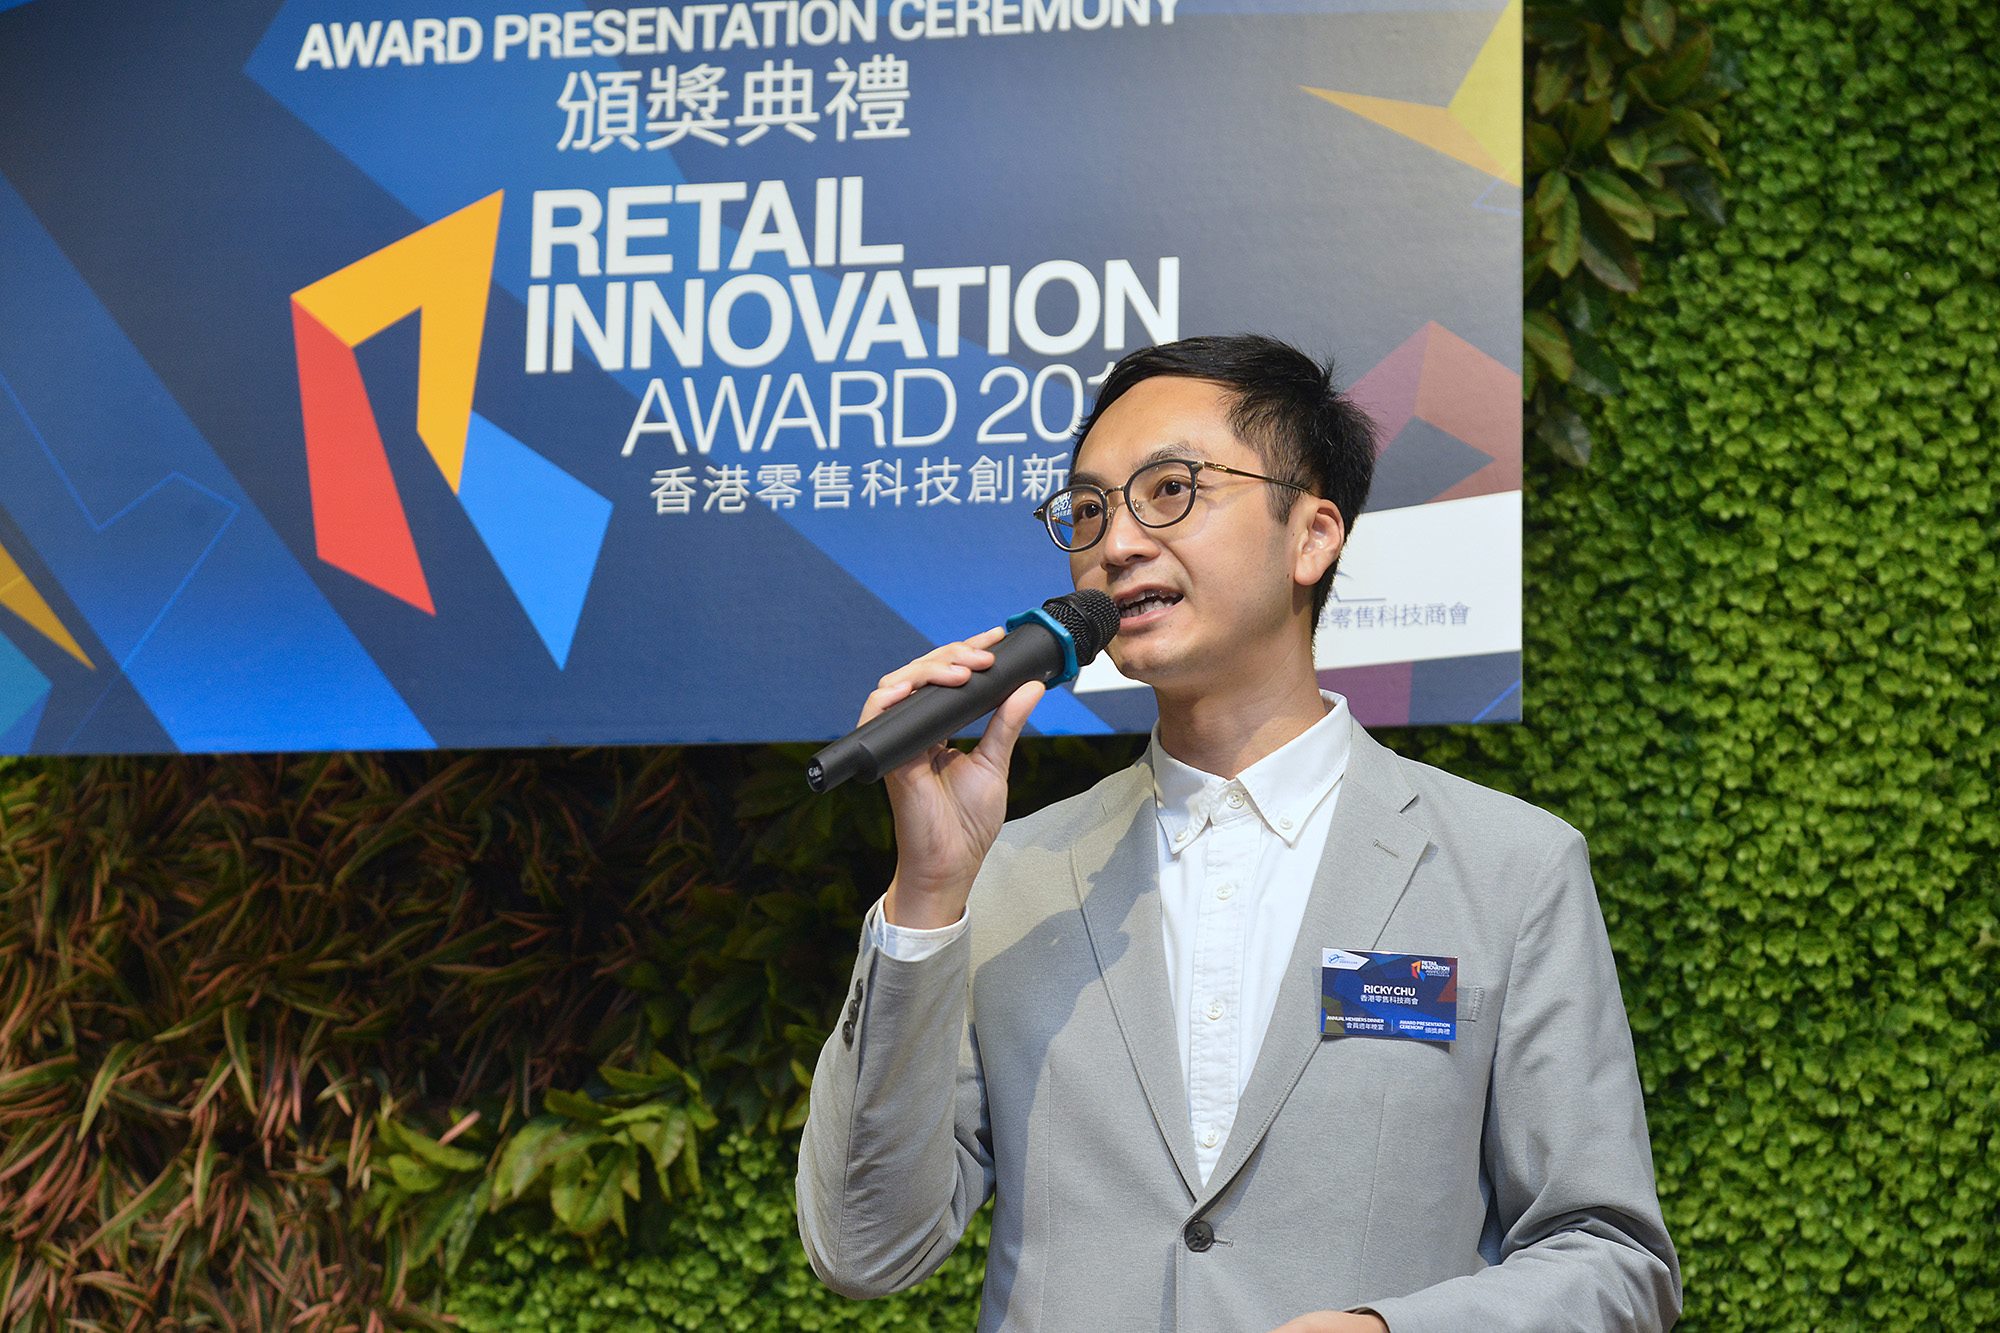 C-star at The Retail Innovation Award 2017